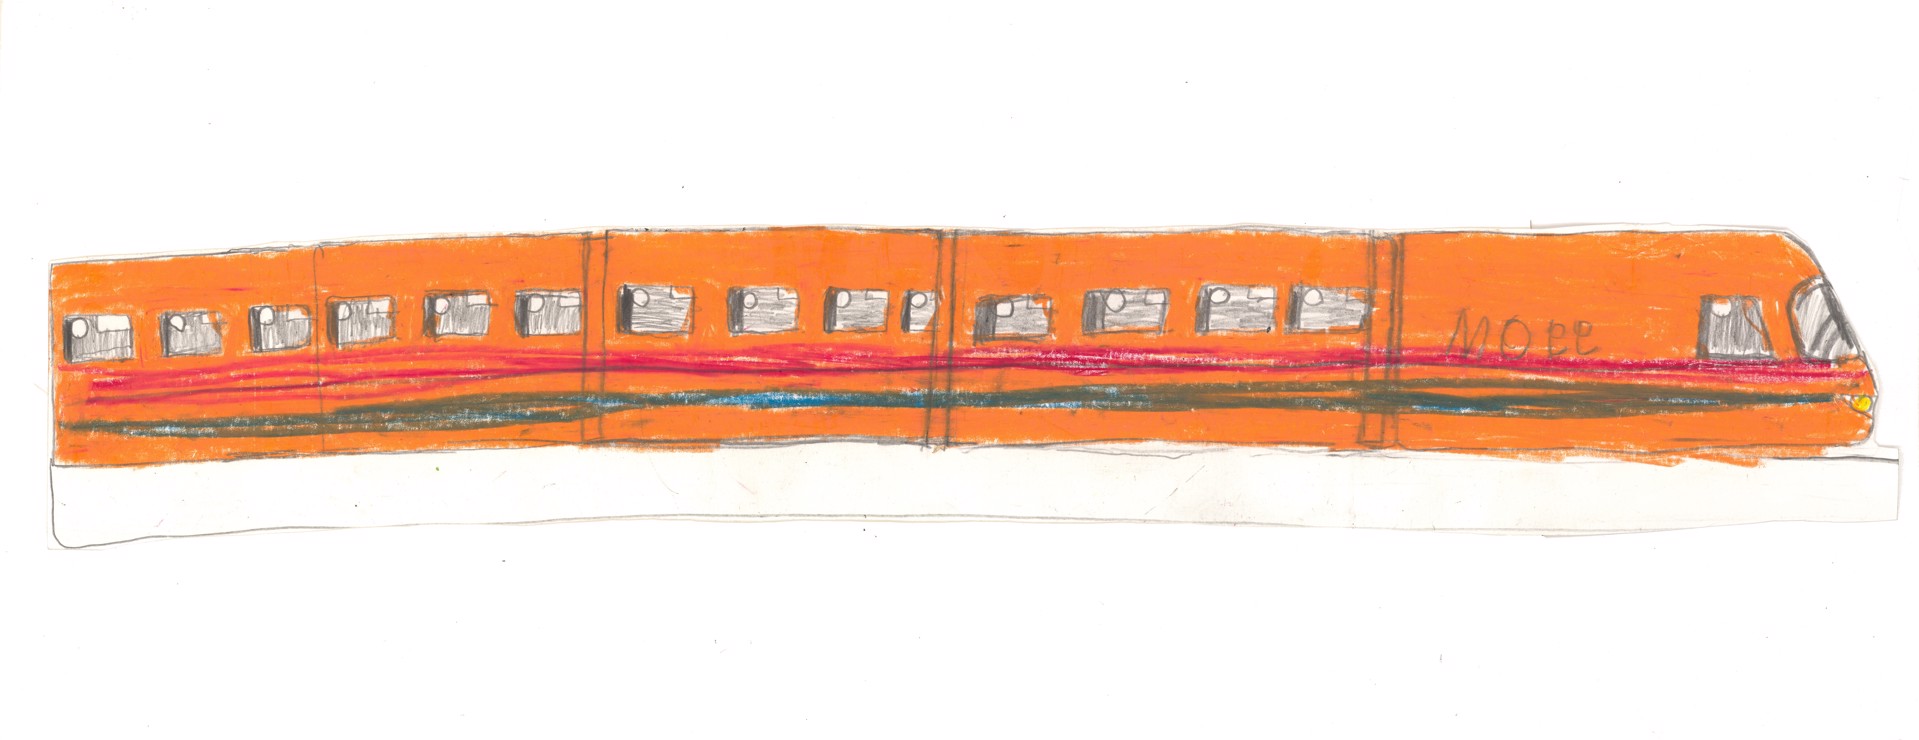 Orange Train by Michael Haynes